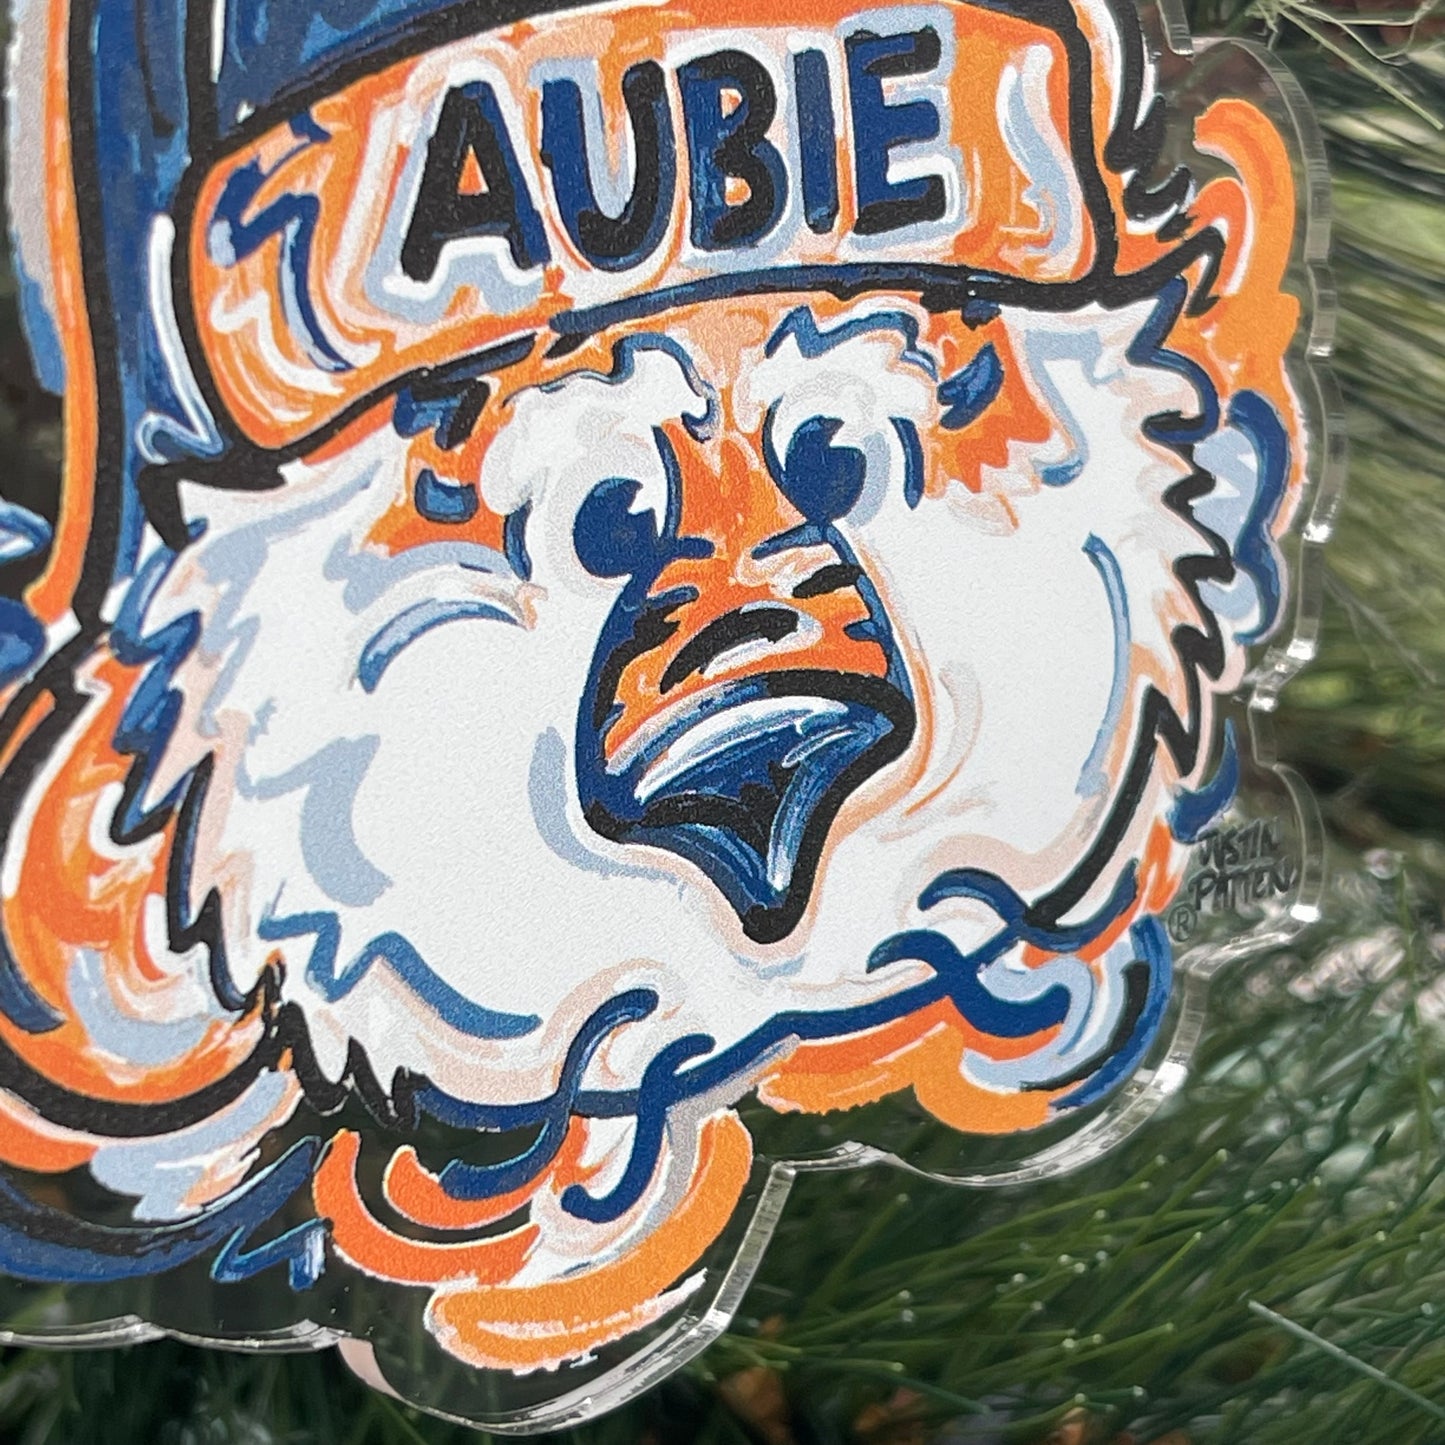 Auburn University Aubie Santa Ornament by Justin Patten